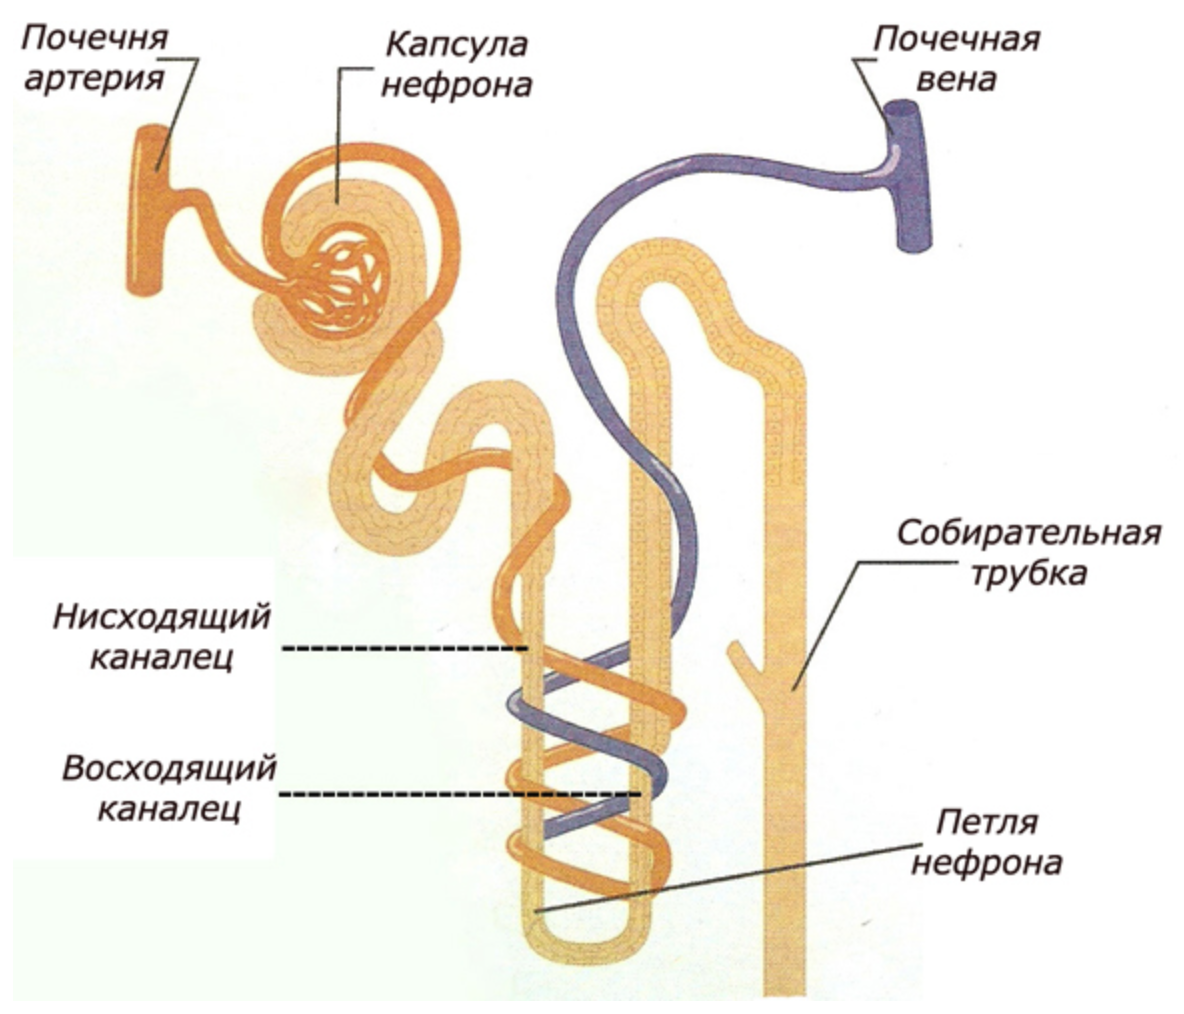 Трубочки организмы